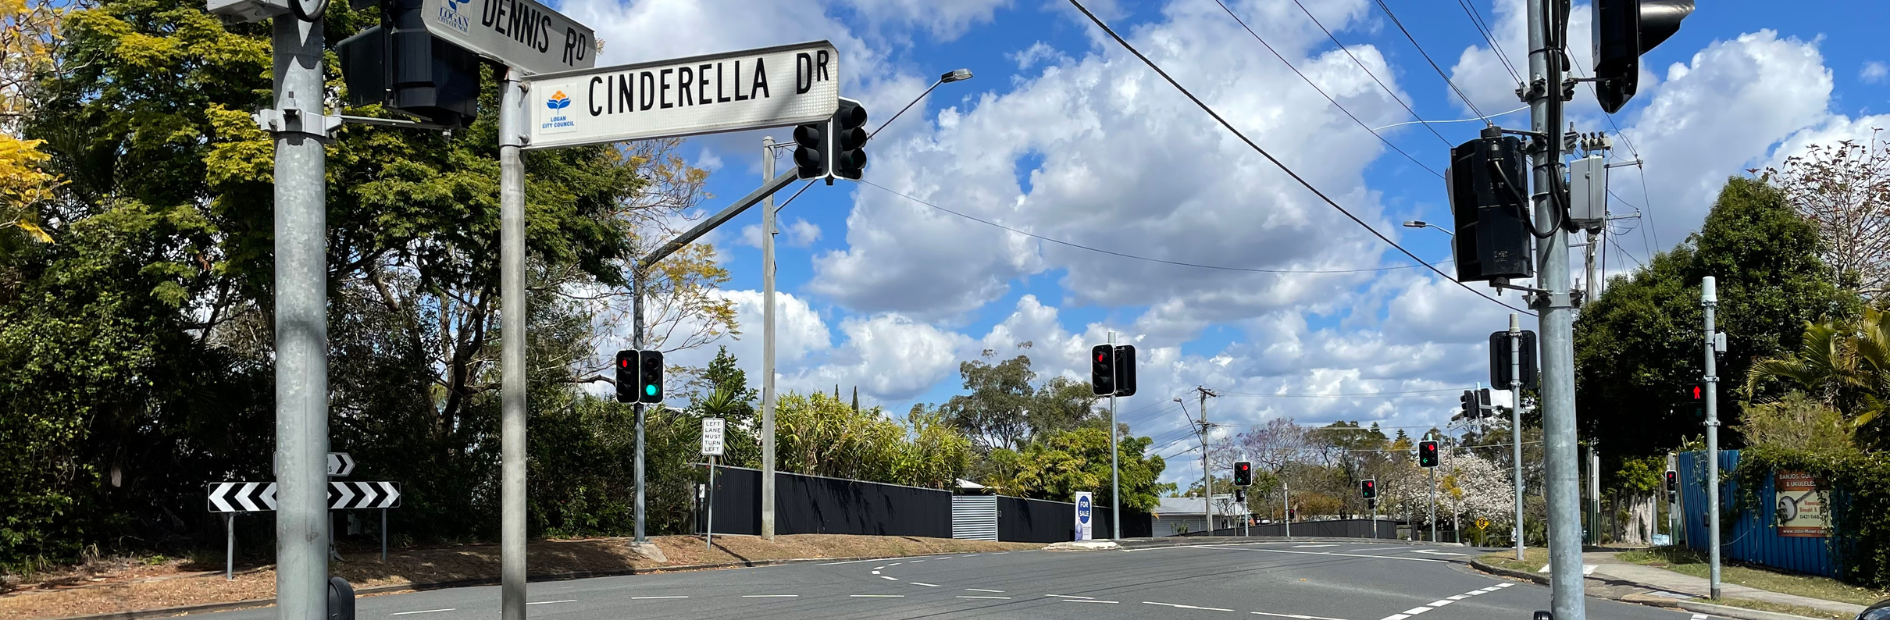 Street cross-section where Cinderella Drive meets Dennis Road